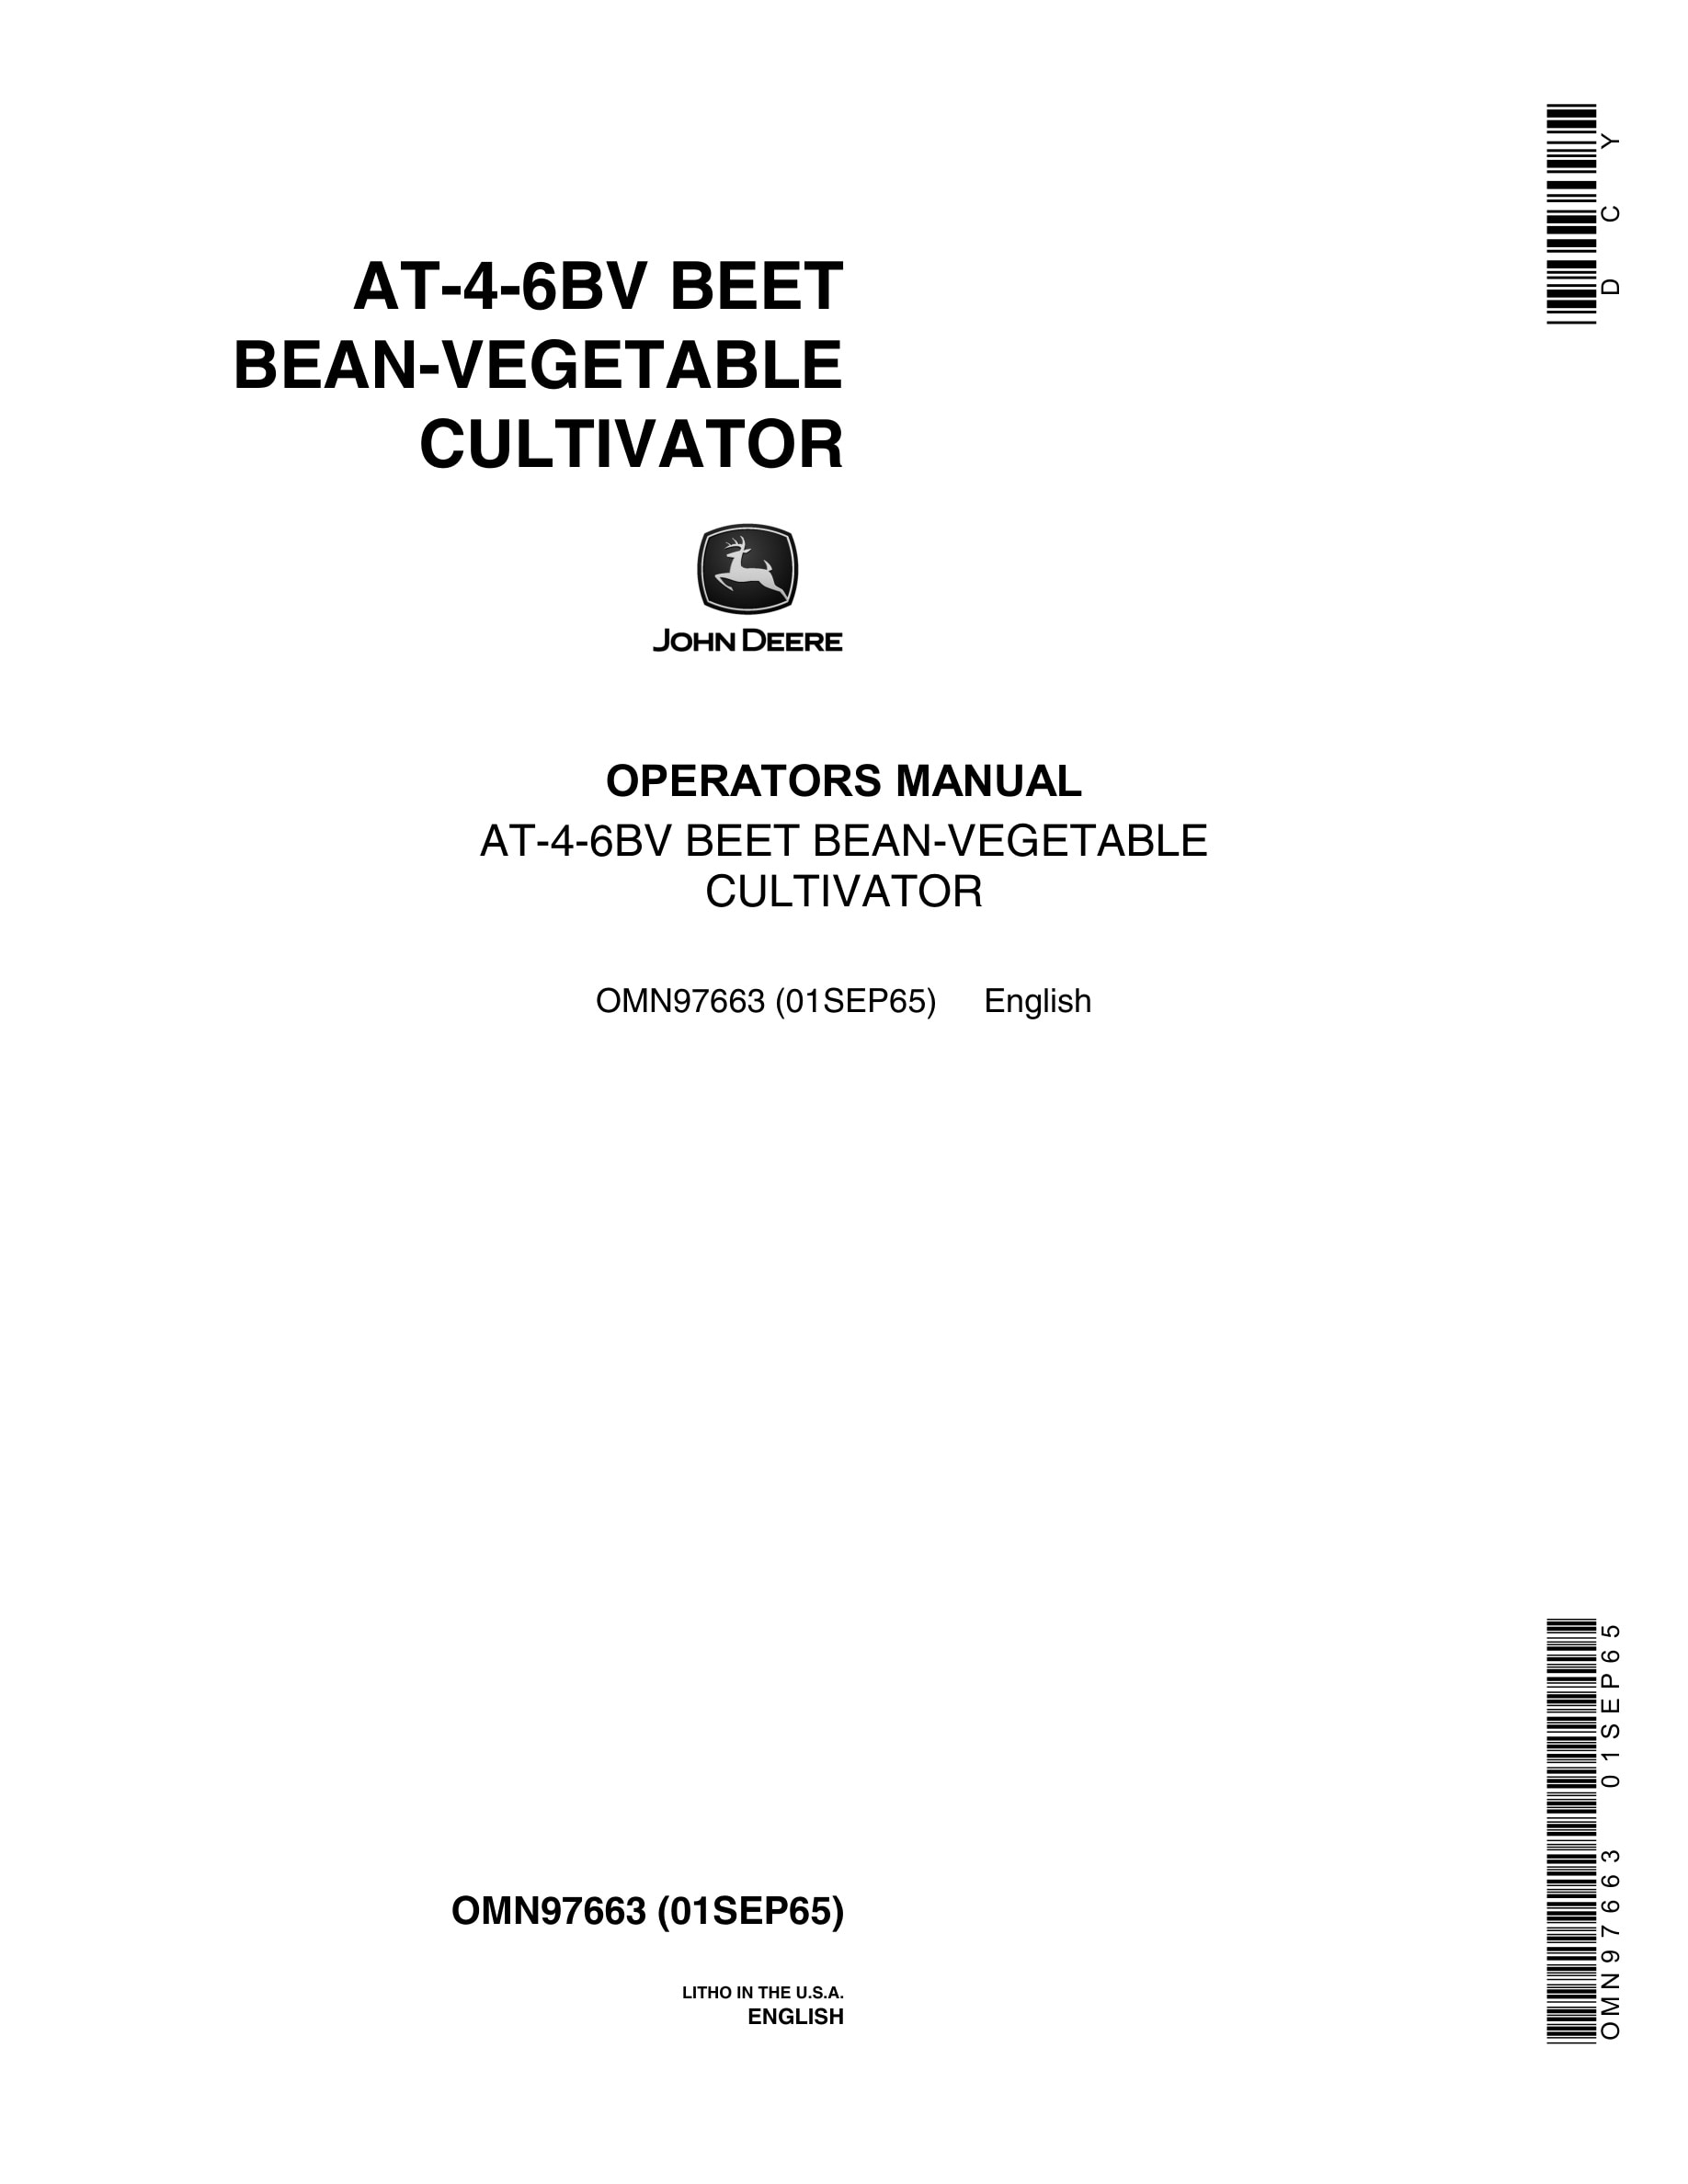 John Deere AT-4-6BV BEET BEAN-VEGETABLE CULTIVATOR Operator Manual OMN97663-1